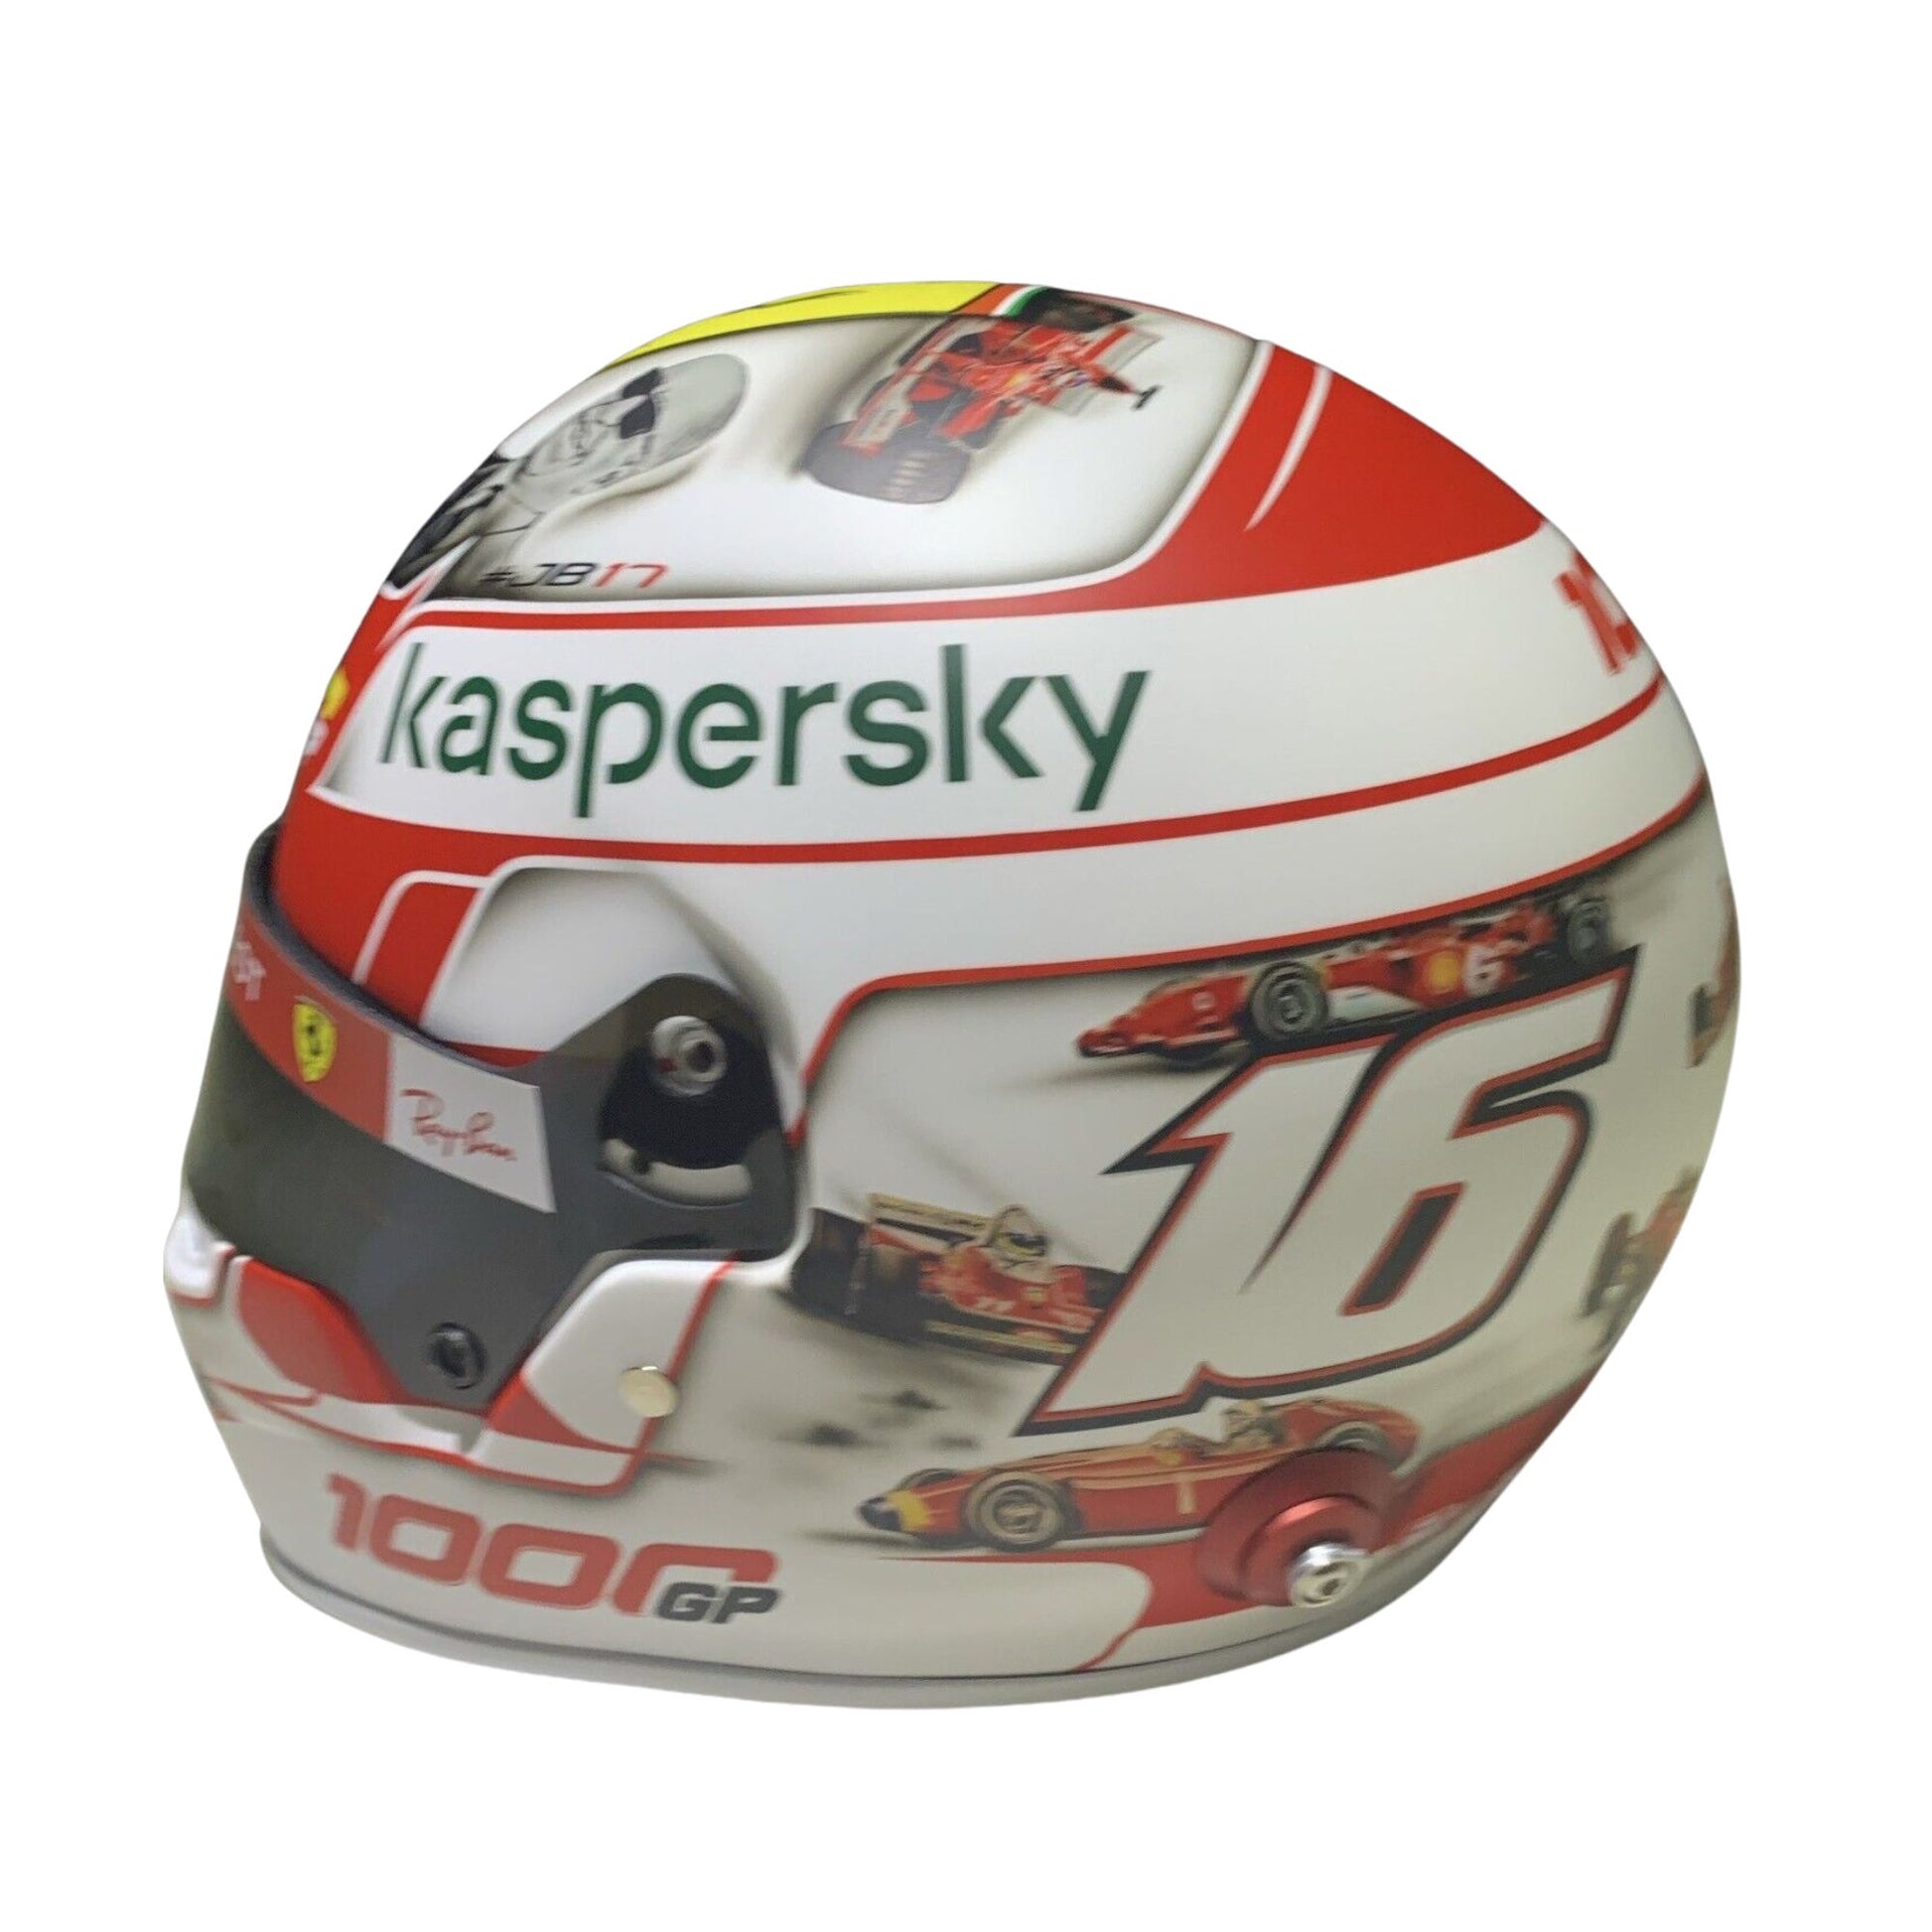 Charles Leclerc Signed Helmet - F1 Memorabilia -  side view